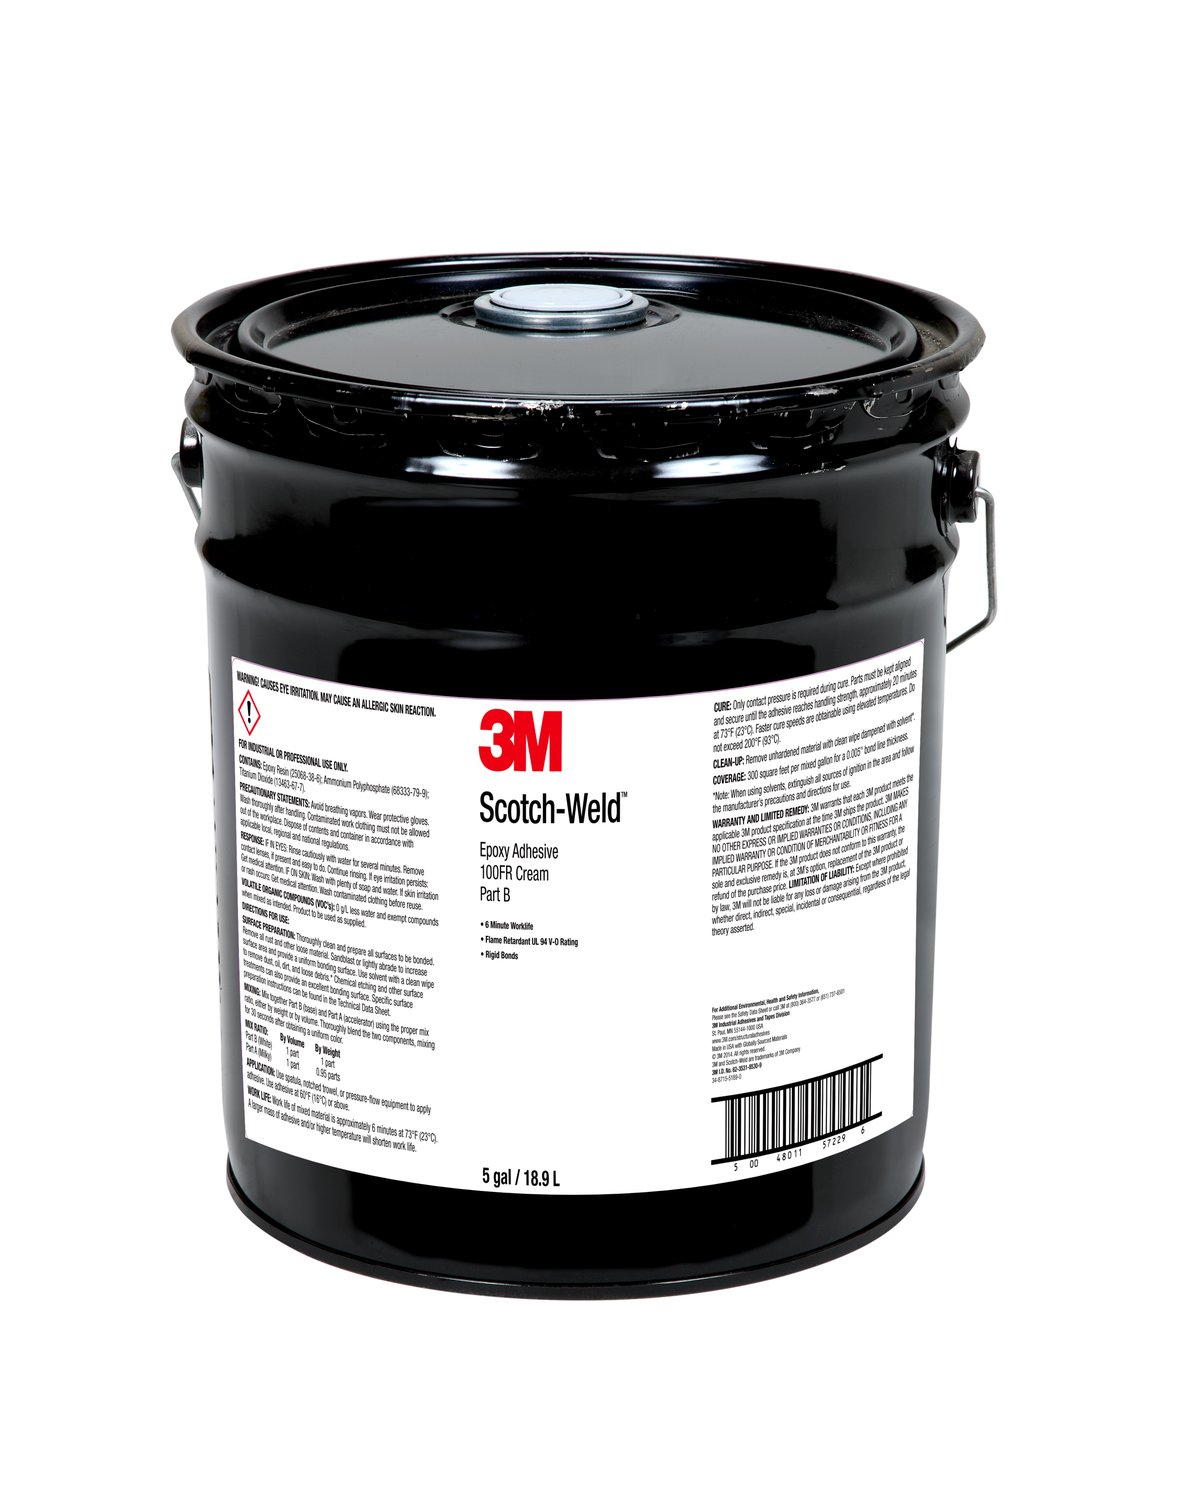 7010366123 - 3M Scotch-Weld Epoxy Adhesive 100FR, Cream, Part B, 5 Gallon (Pail)
Drum